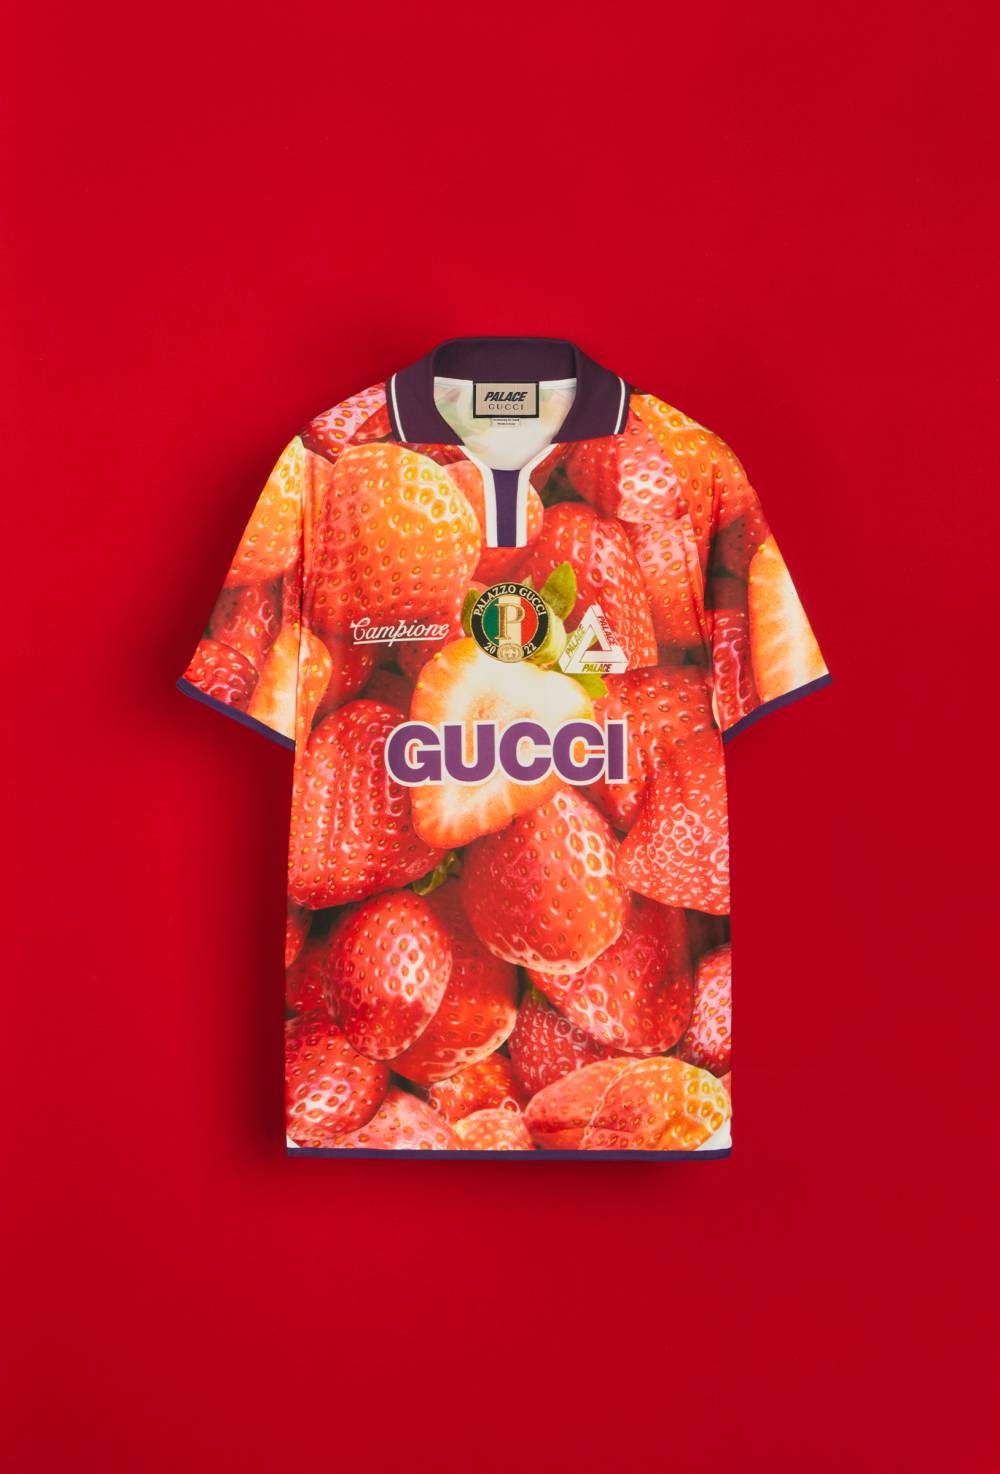  Strawberry print technical jersey football T-shirt by Palace Gucci image #1